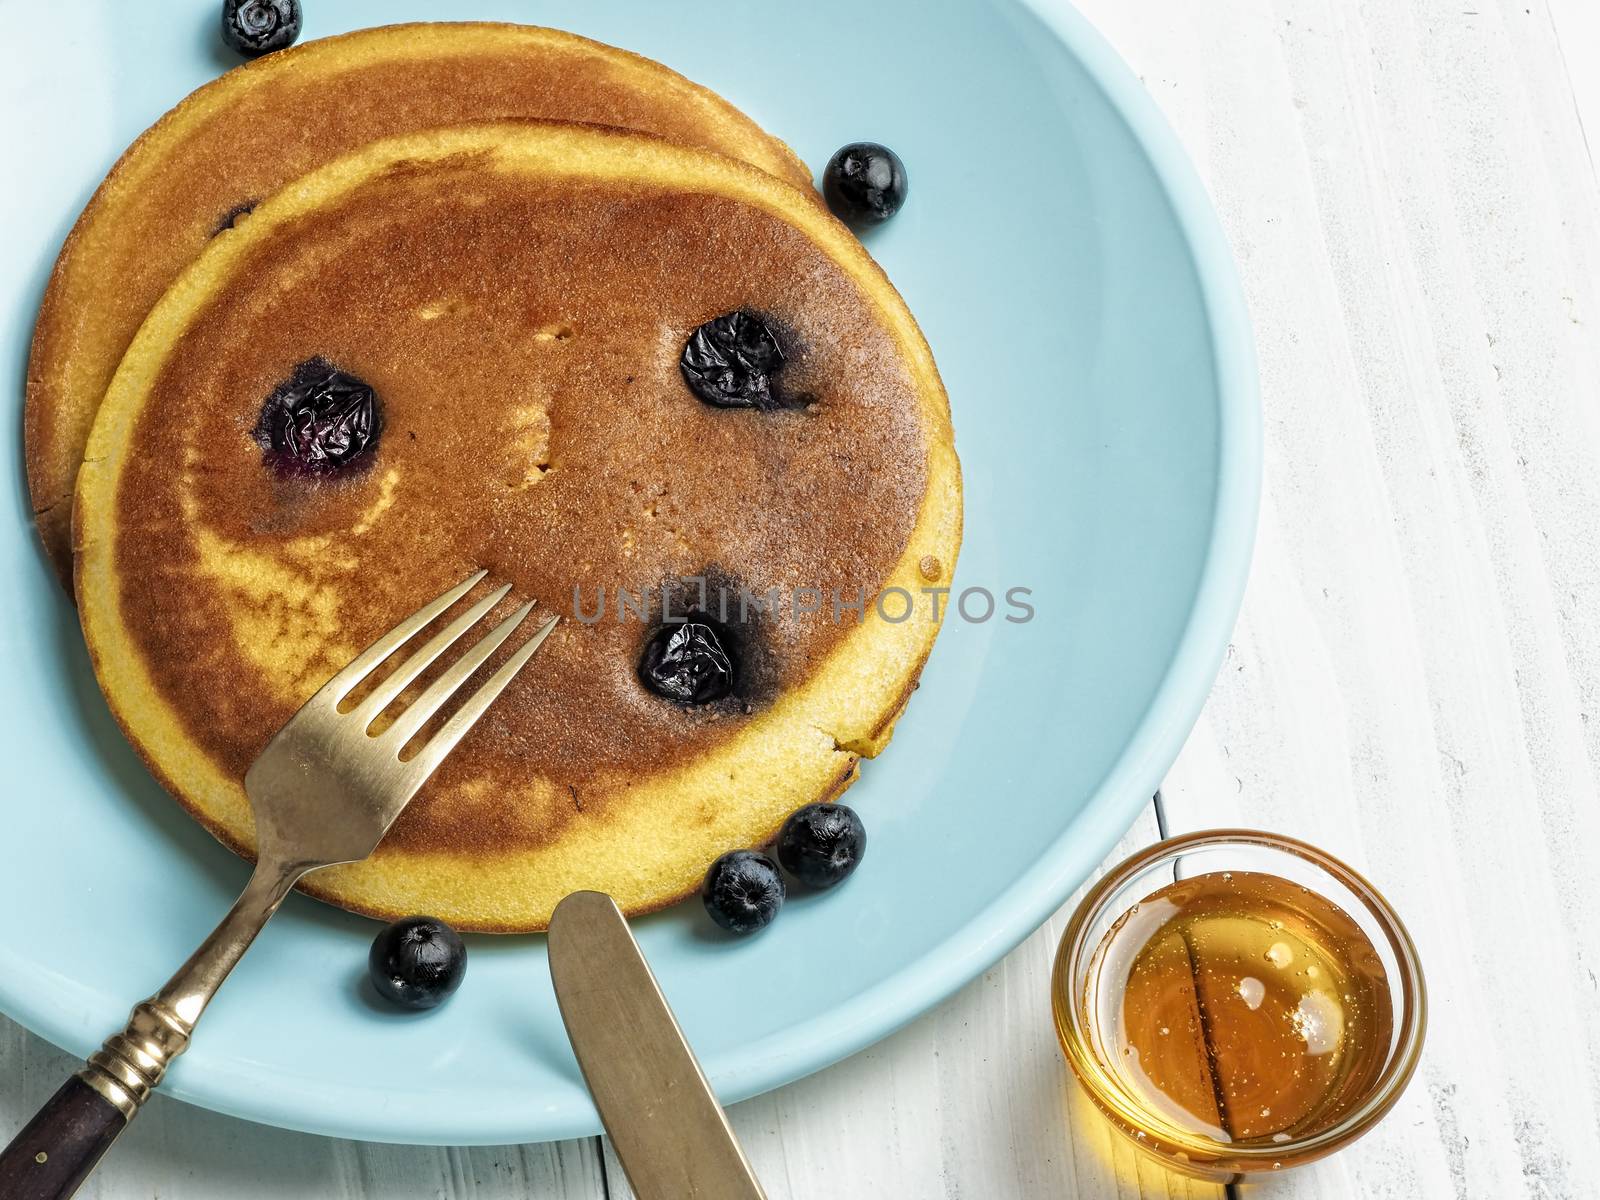 rustic golden blueberry pancake by zkruger